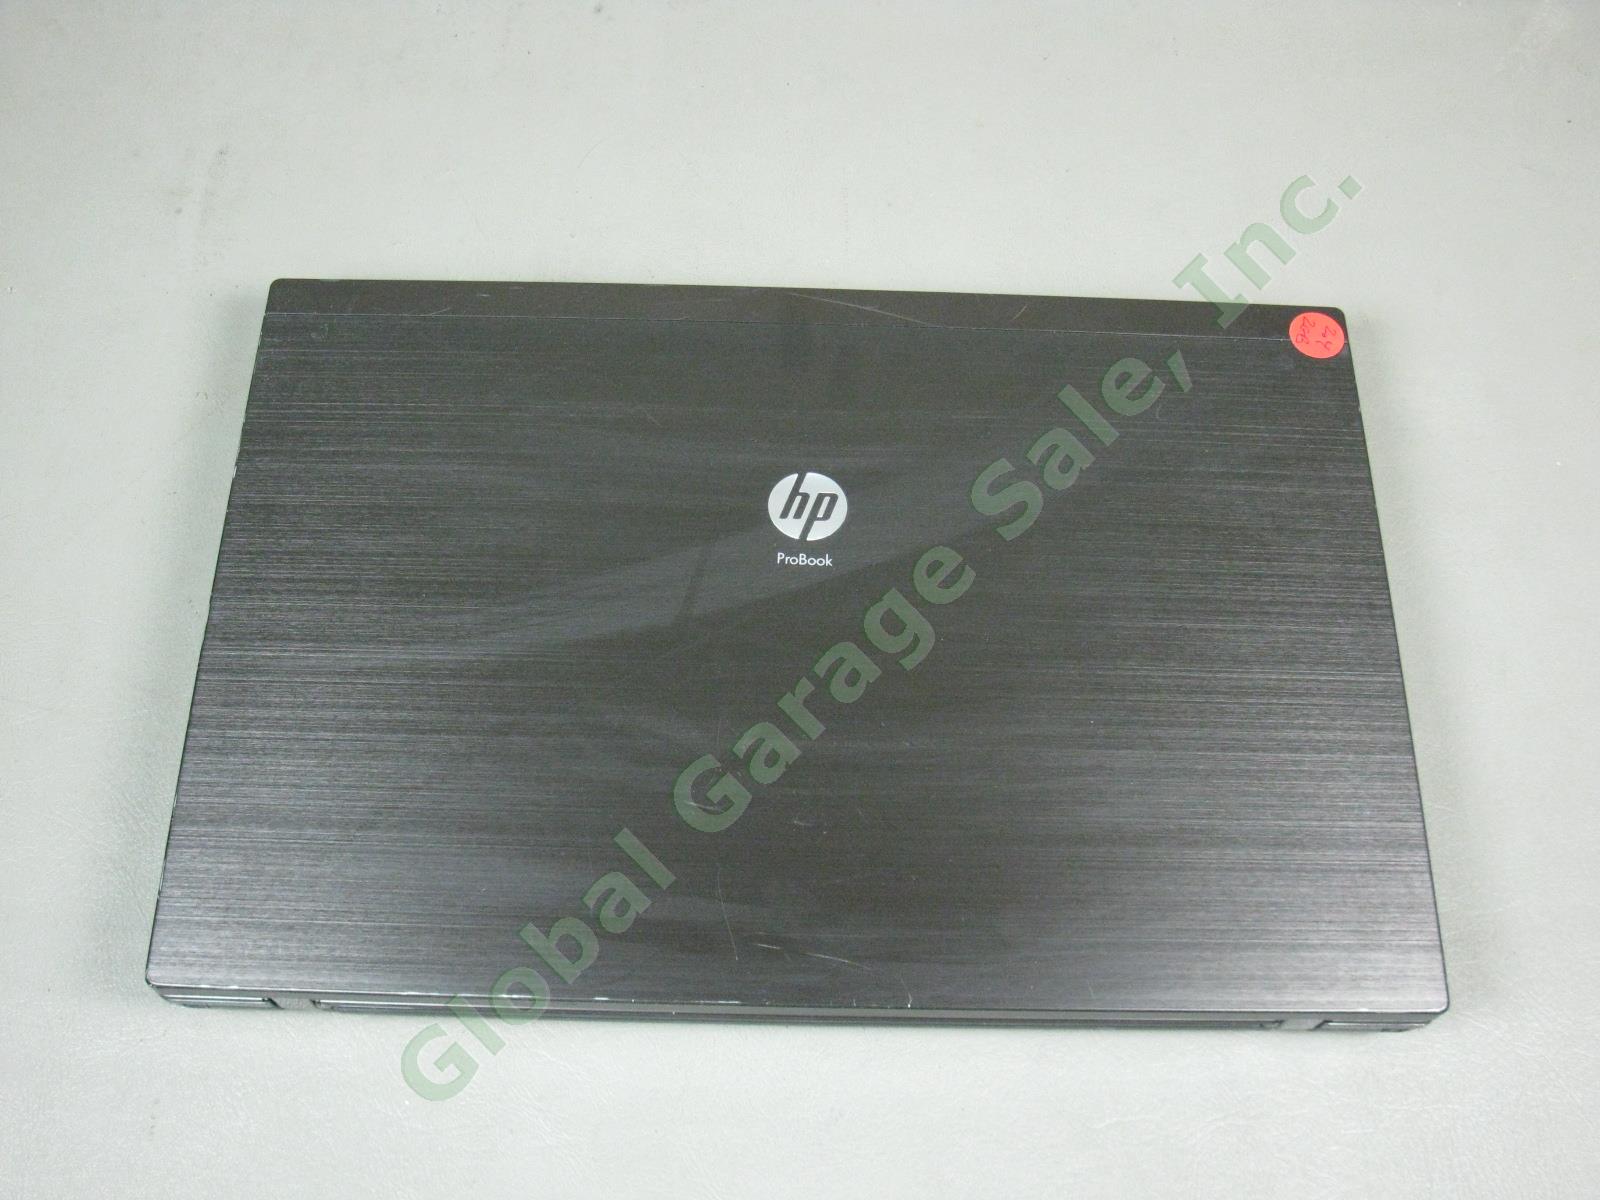 HP 4520s ProBook Laptop Computer Intel Core i5 M520 2.40GHz 2GB Windows 7 Pro NR 3